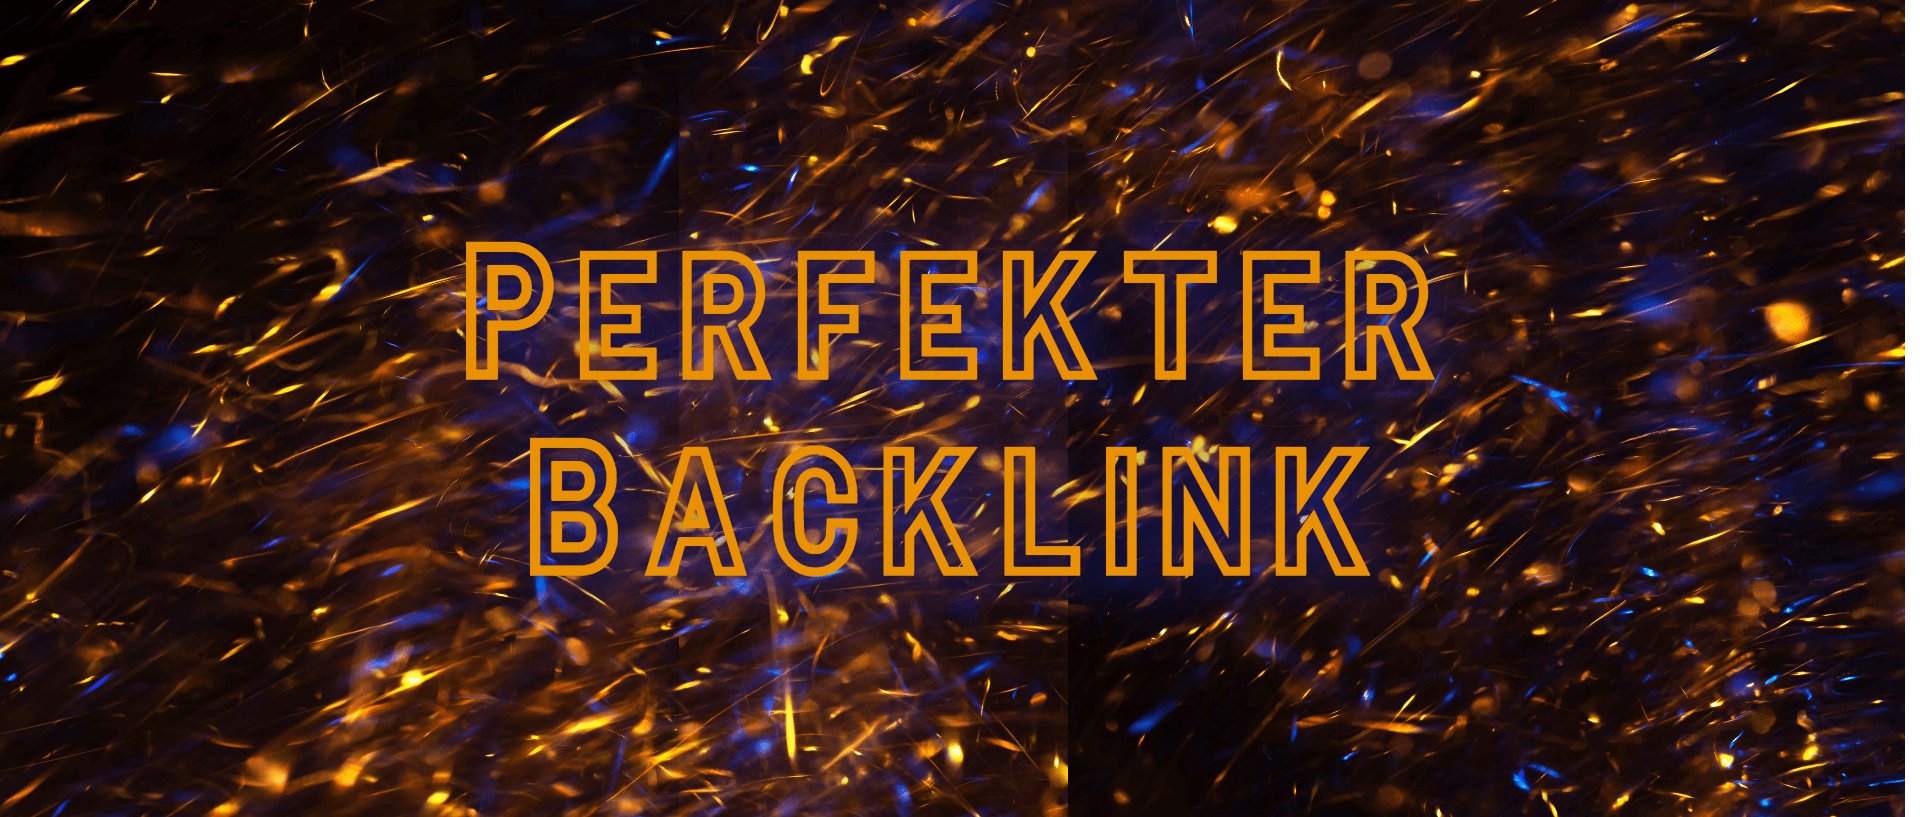 Perfekter Backlink